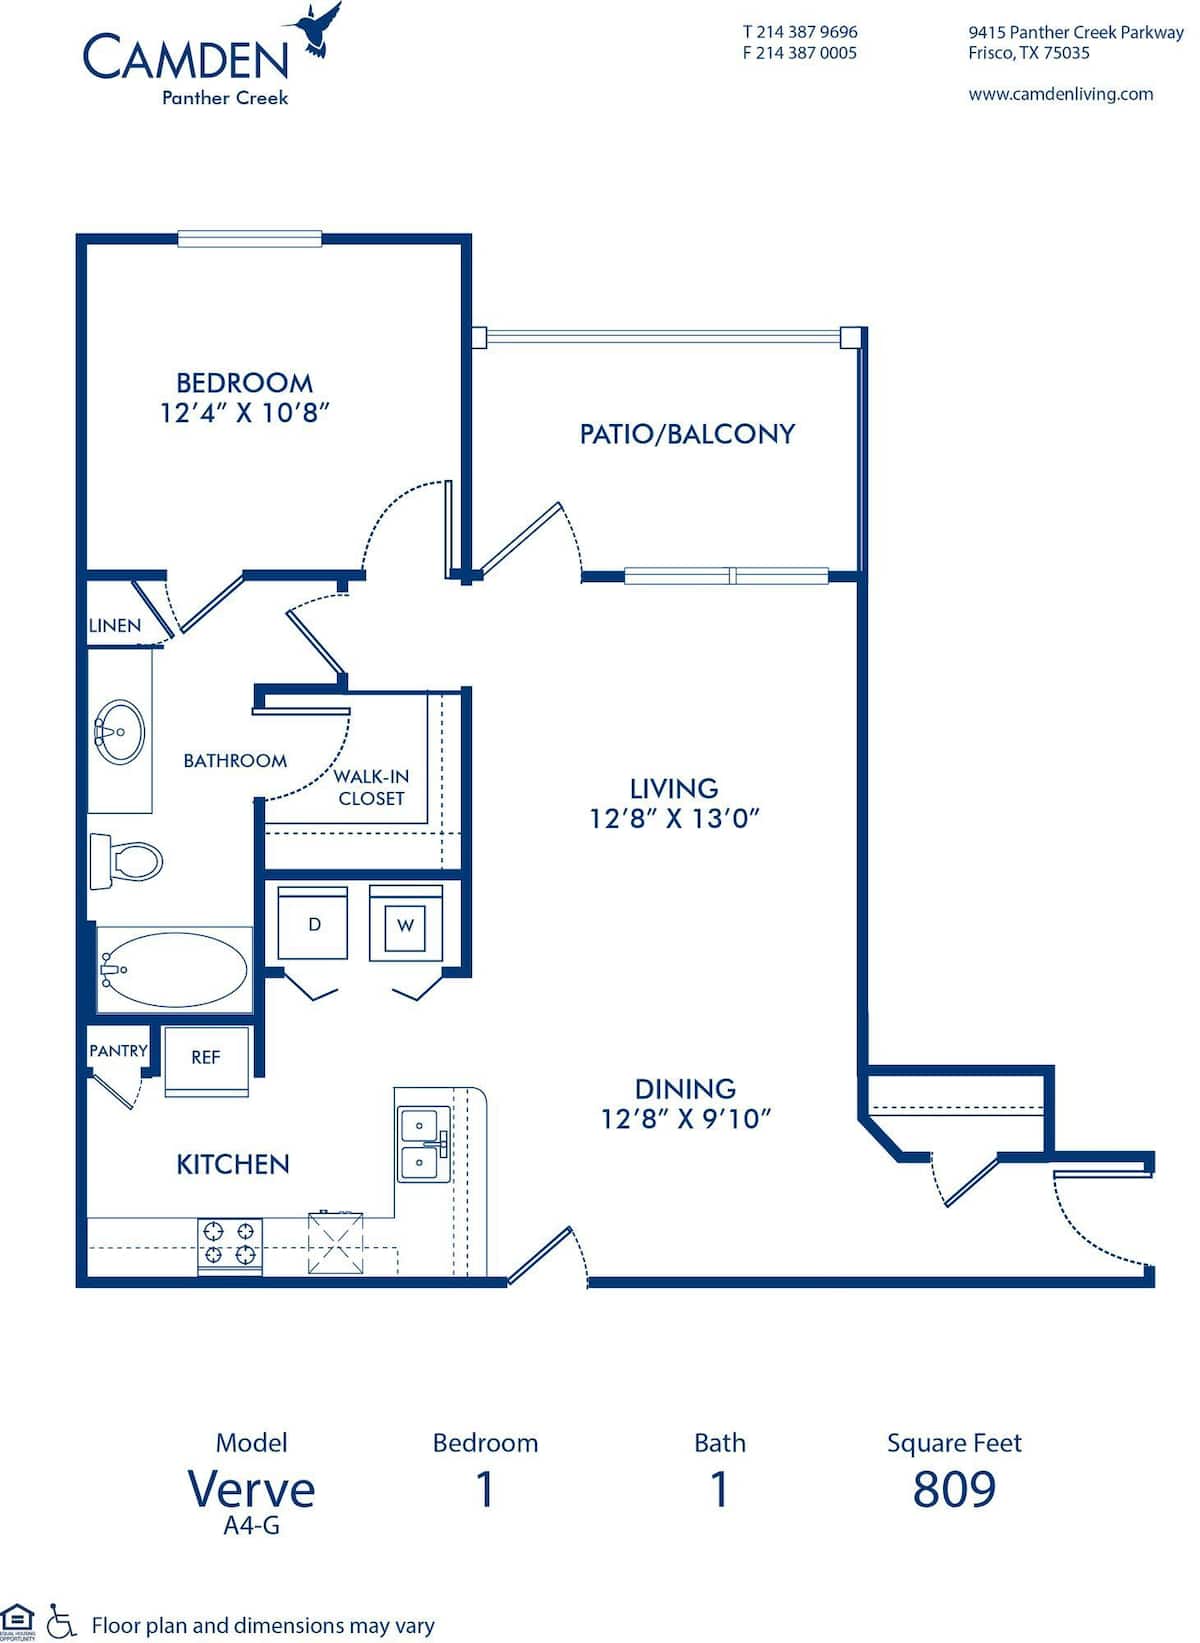 Floorplan diagram for Verve, showing 1 bedroom